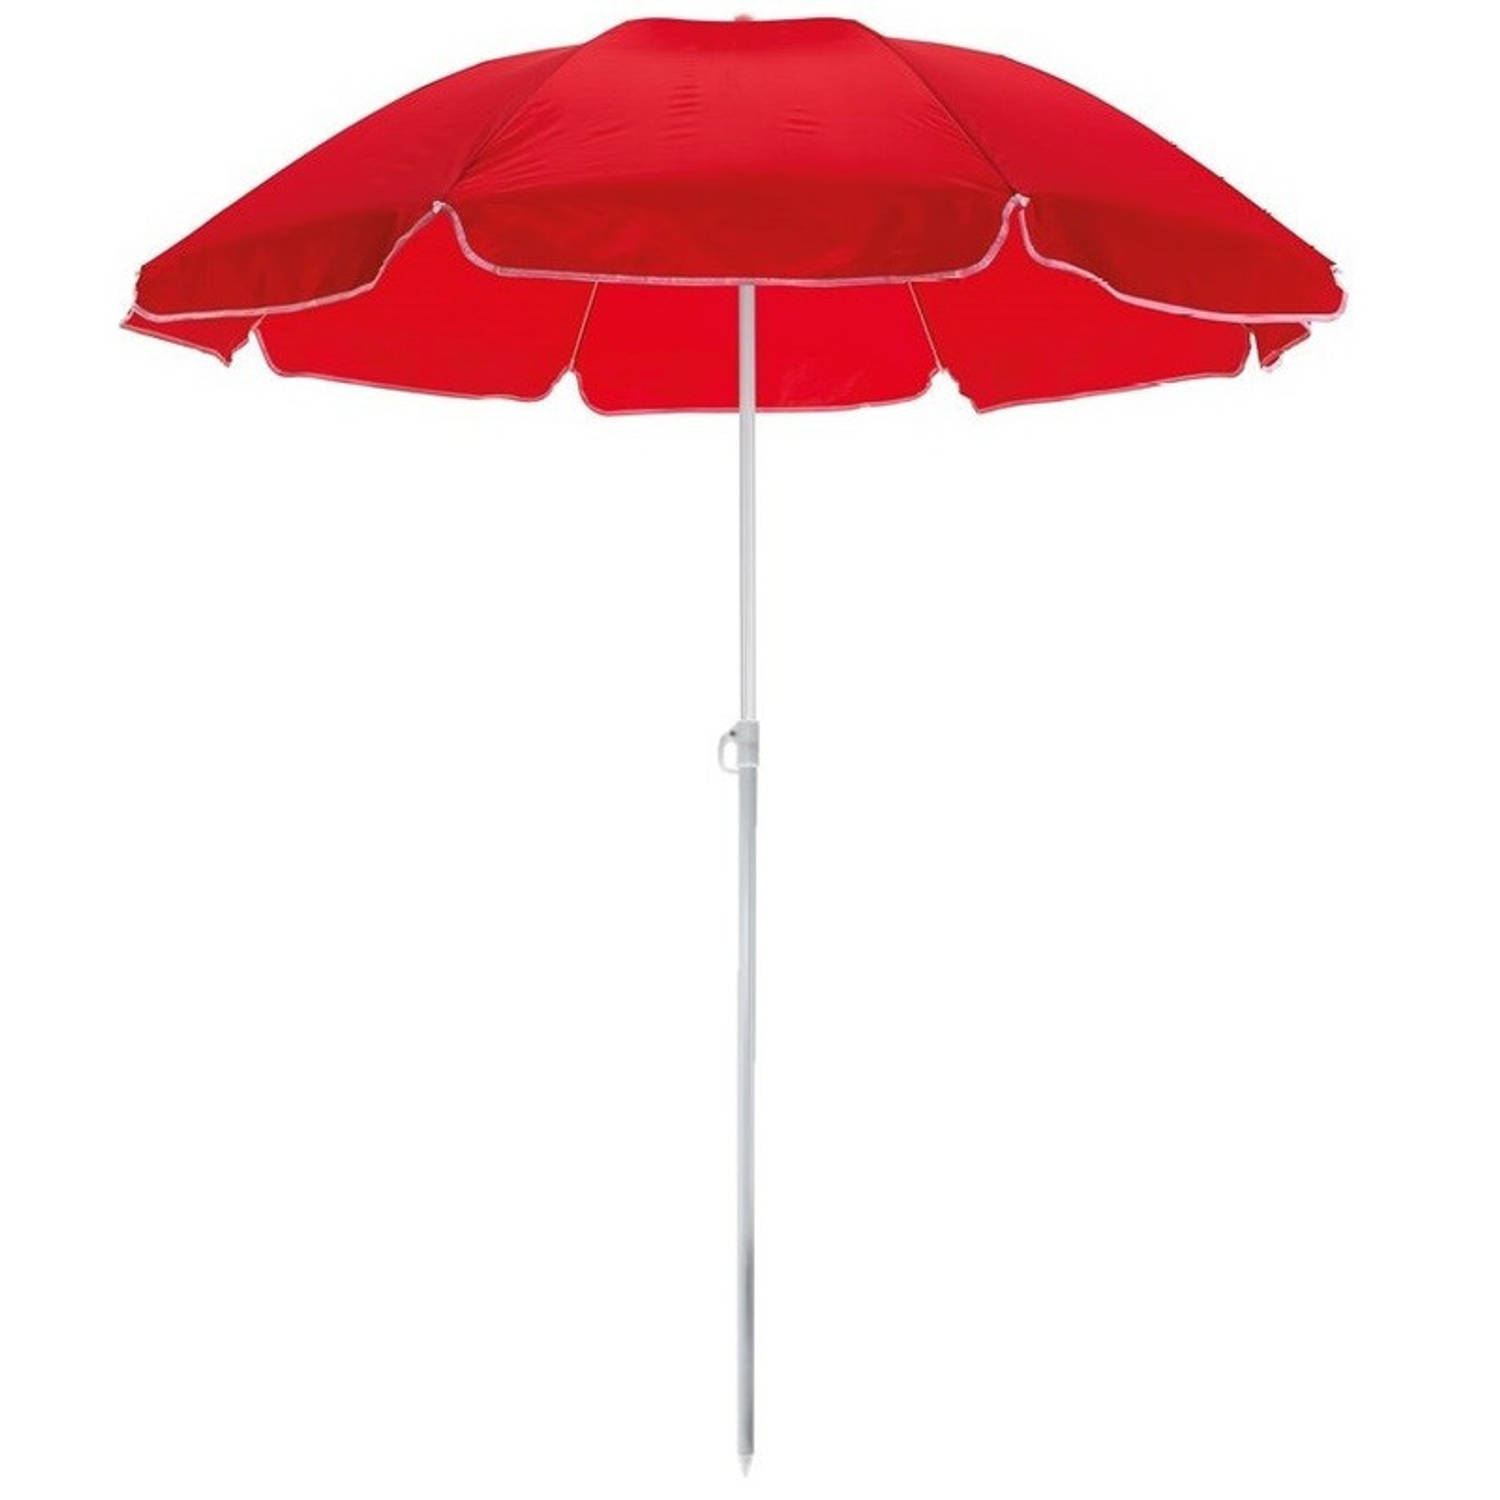 Rode strand parasol van polyester 145 cm - Parasols